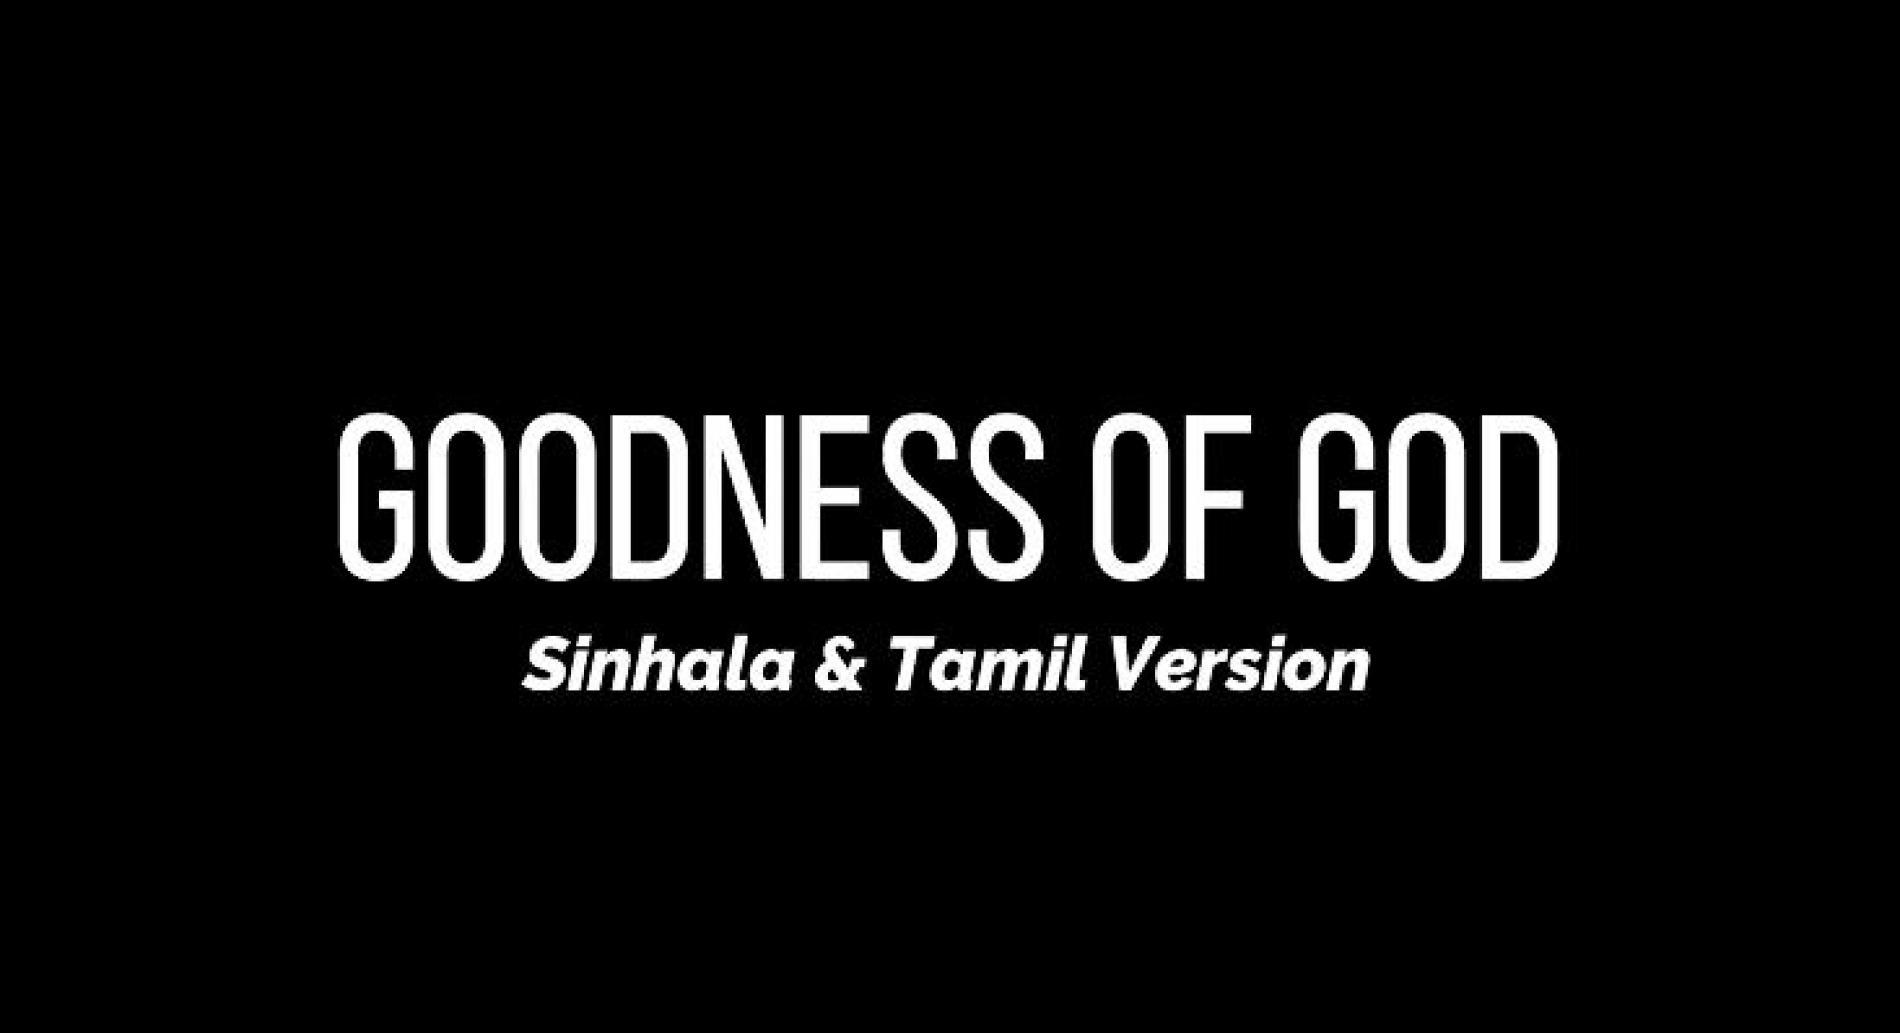 Goodness of God – Sinhala & Tamil Version (by Samithri Kanchana & Anu Madhubhashinie)